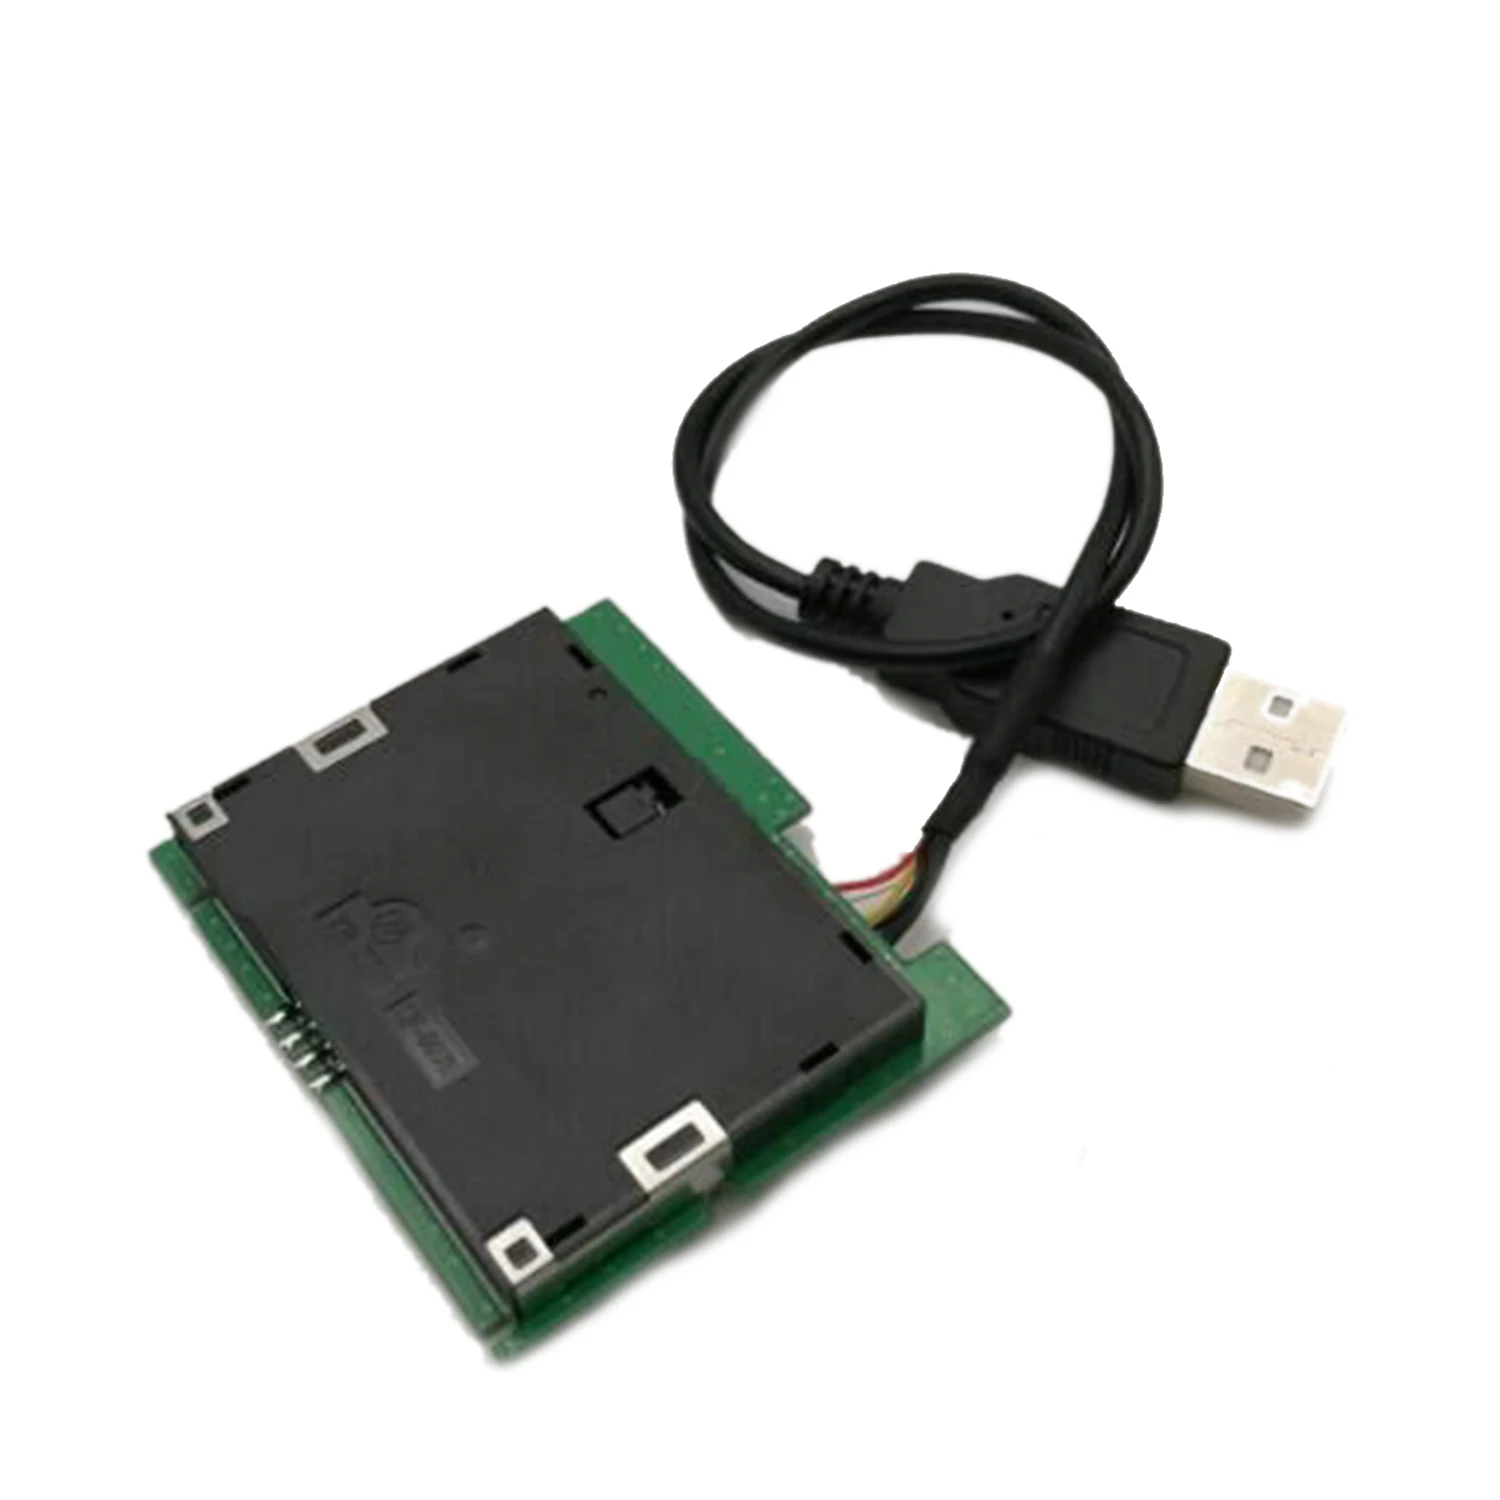 

USB CCID ISO / IEC 7816 PC / SC EMV IC модуль считывания смарт-карт MCR3521-M